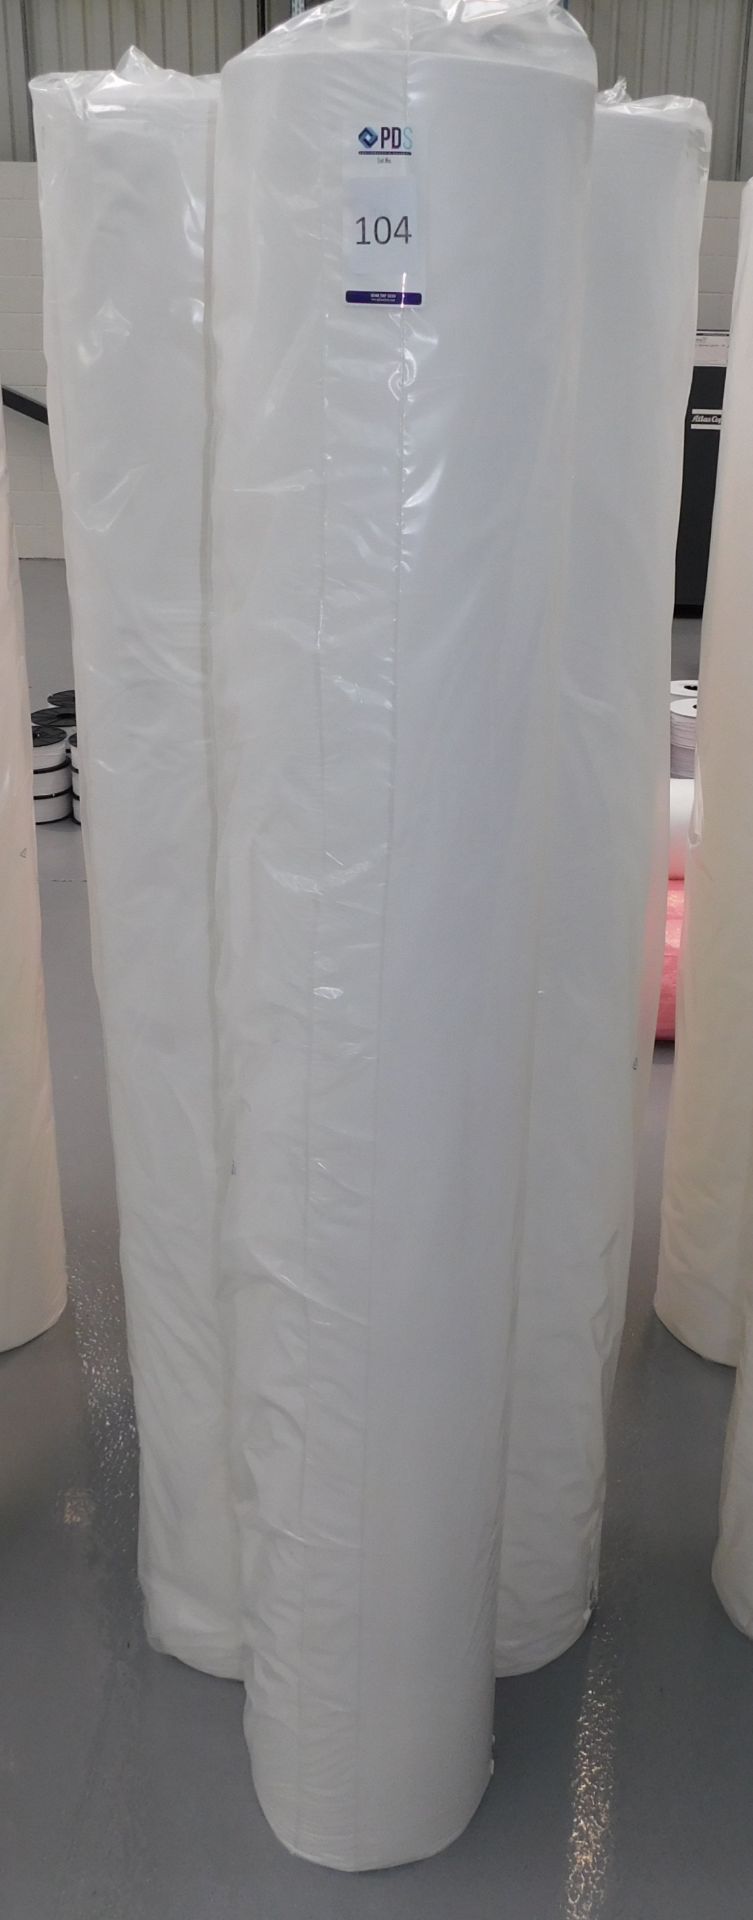 3 Rolls of Viscose Fabric (Nylon Nanodot) 360m x 1.8m per roll